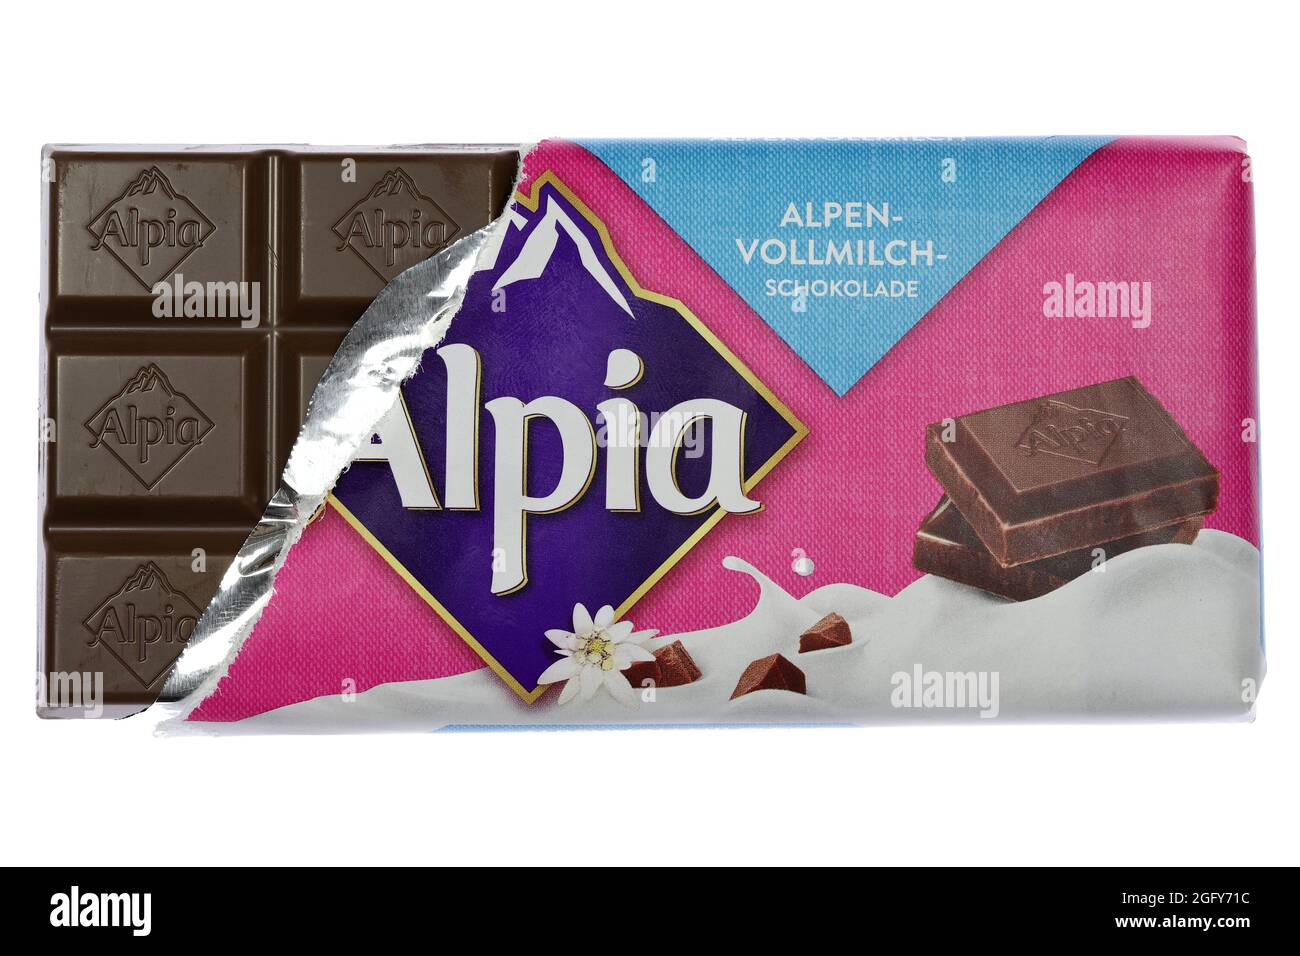 Alpia Alpine Milk chocolate isolated on white background Stock Photo